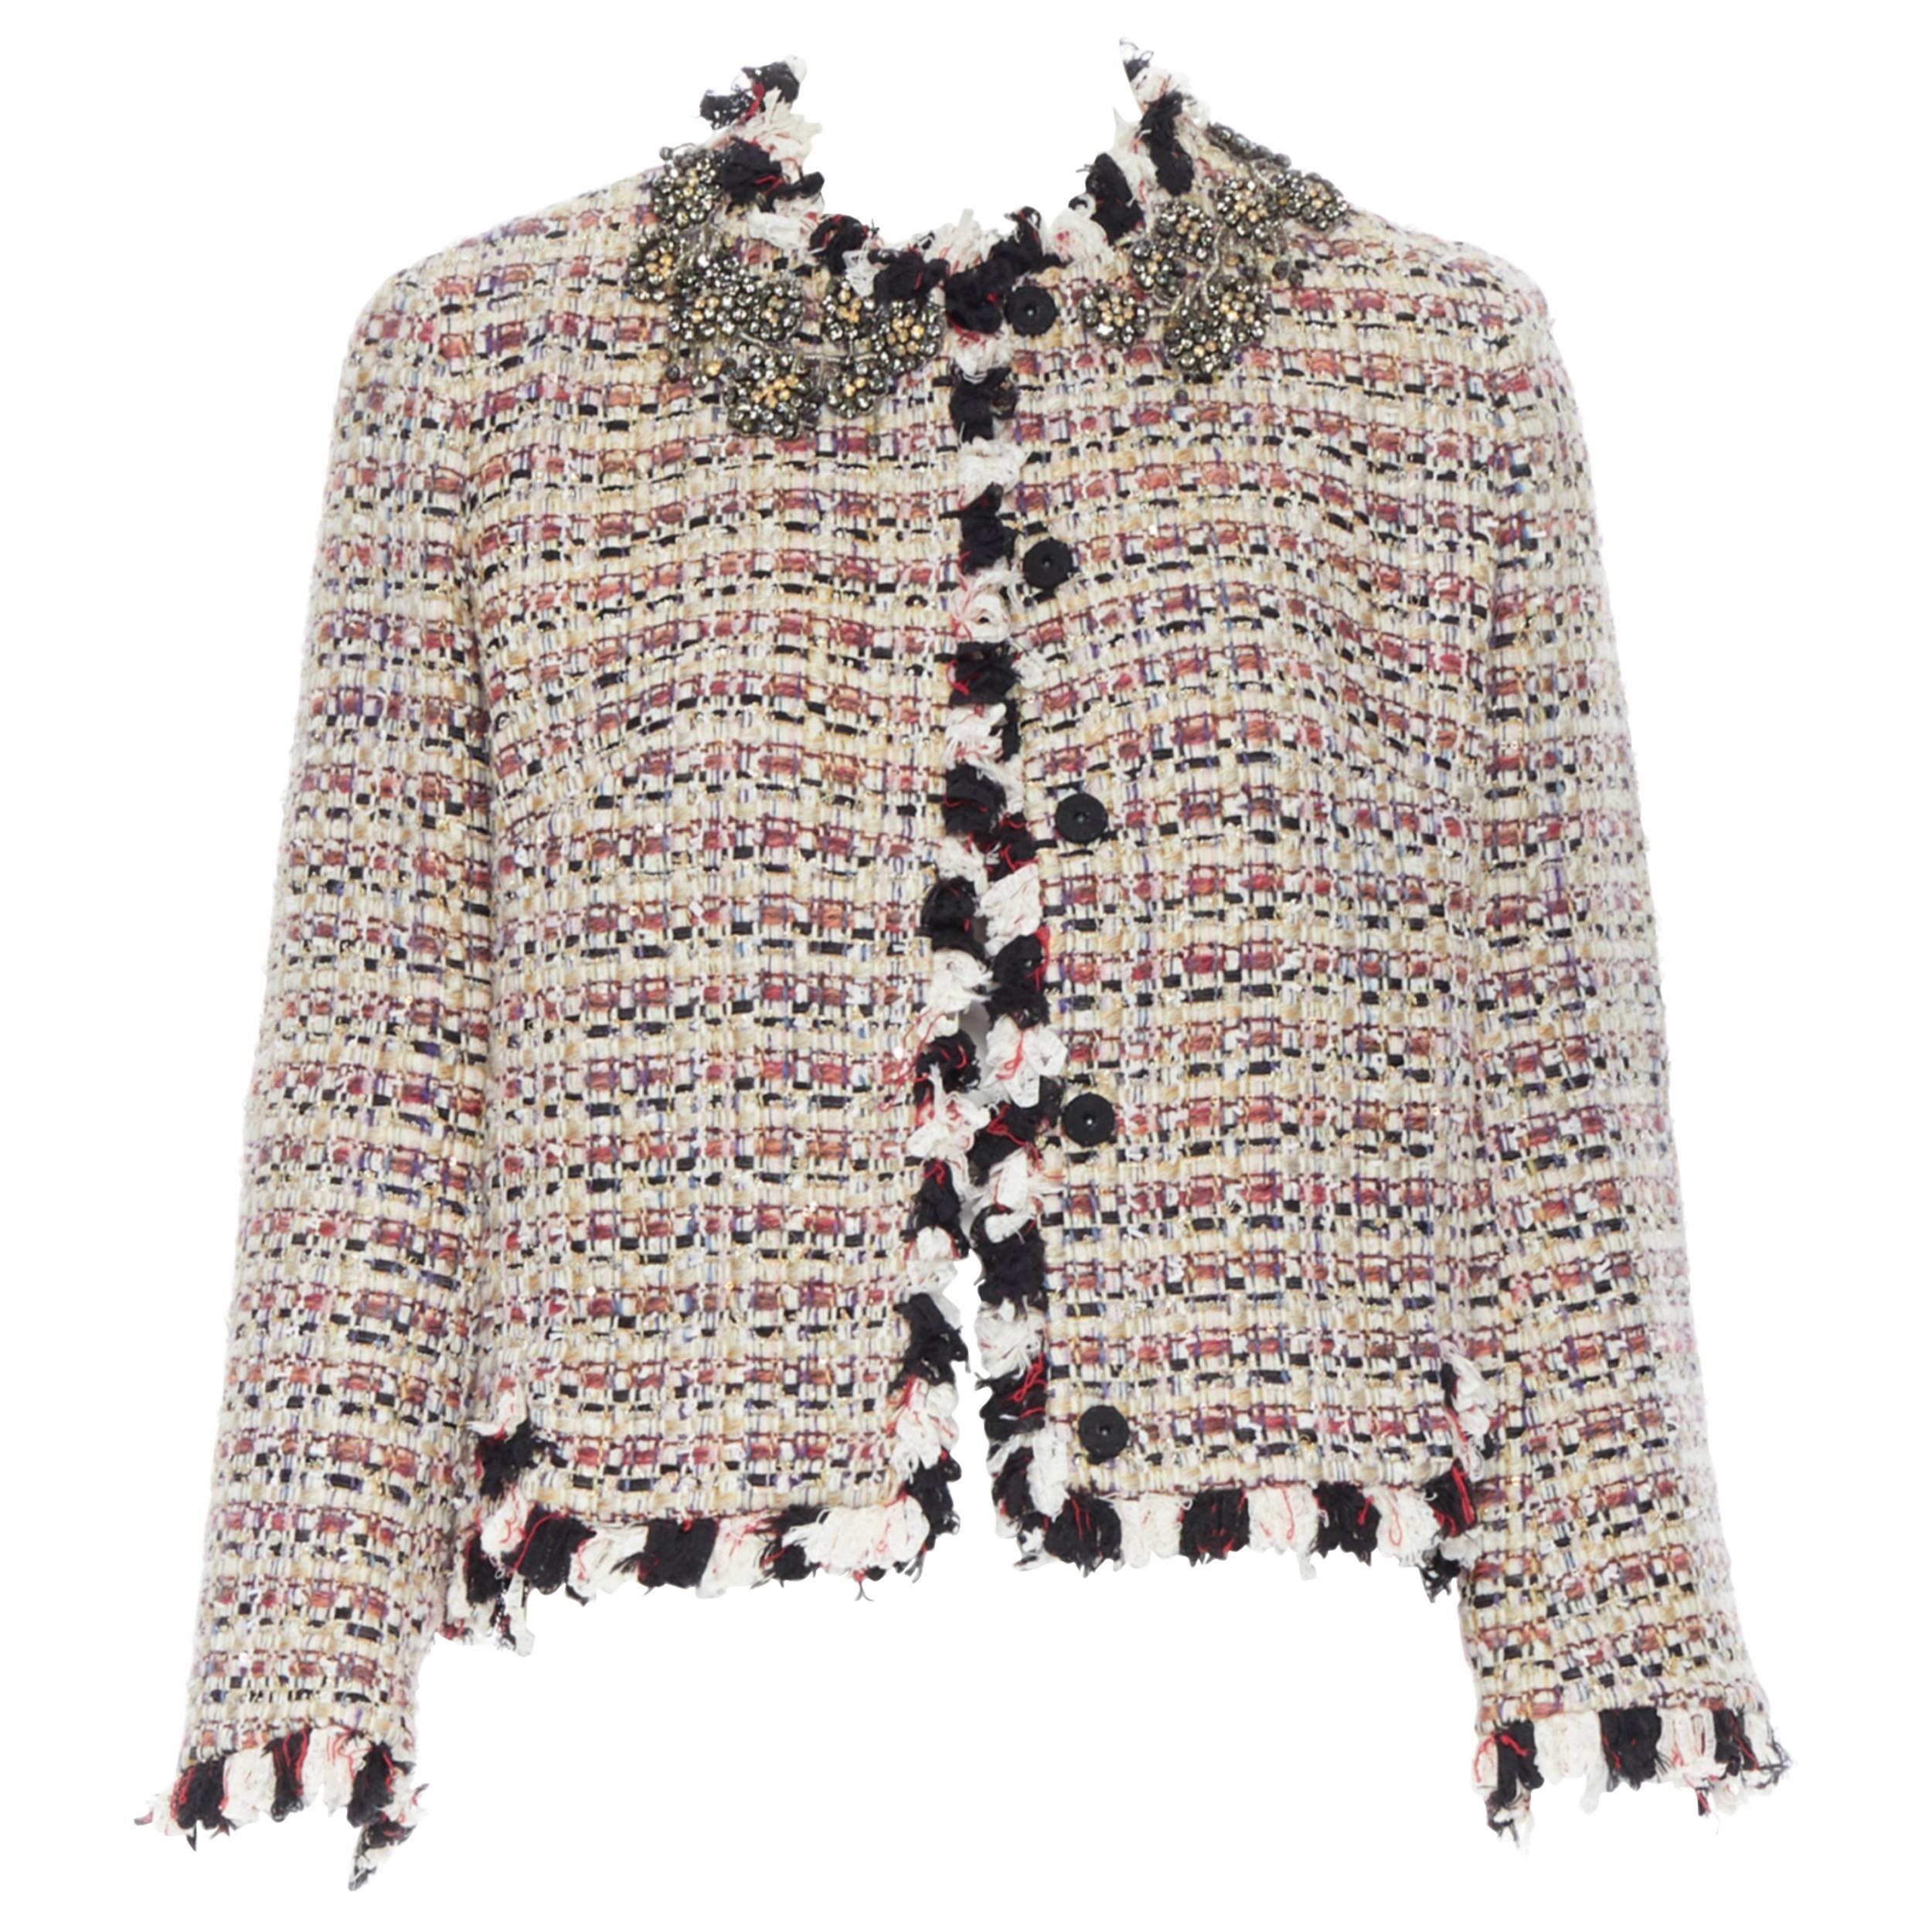 SOONIL, Sequin Embellished Tweed Jacket, Women